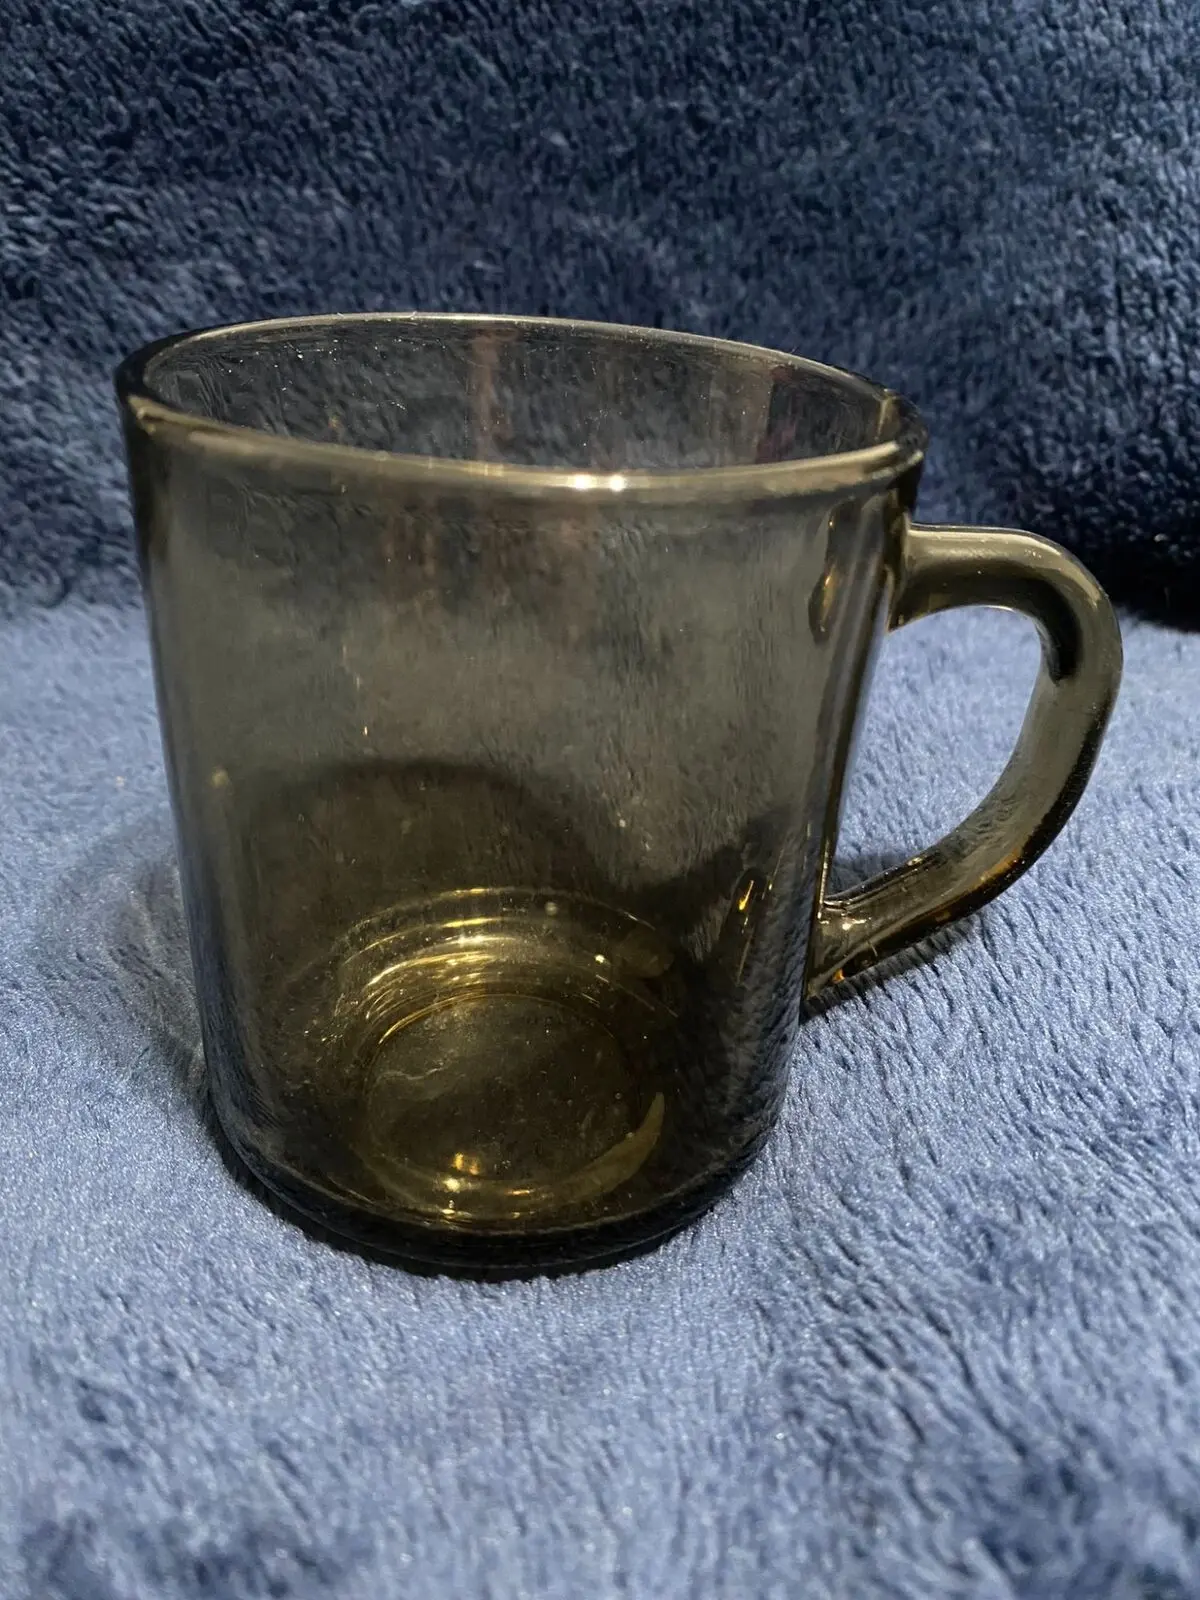 retro smoked glass mugs - Are glass mugs better for coffee